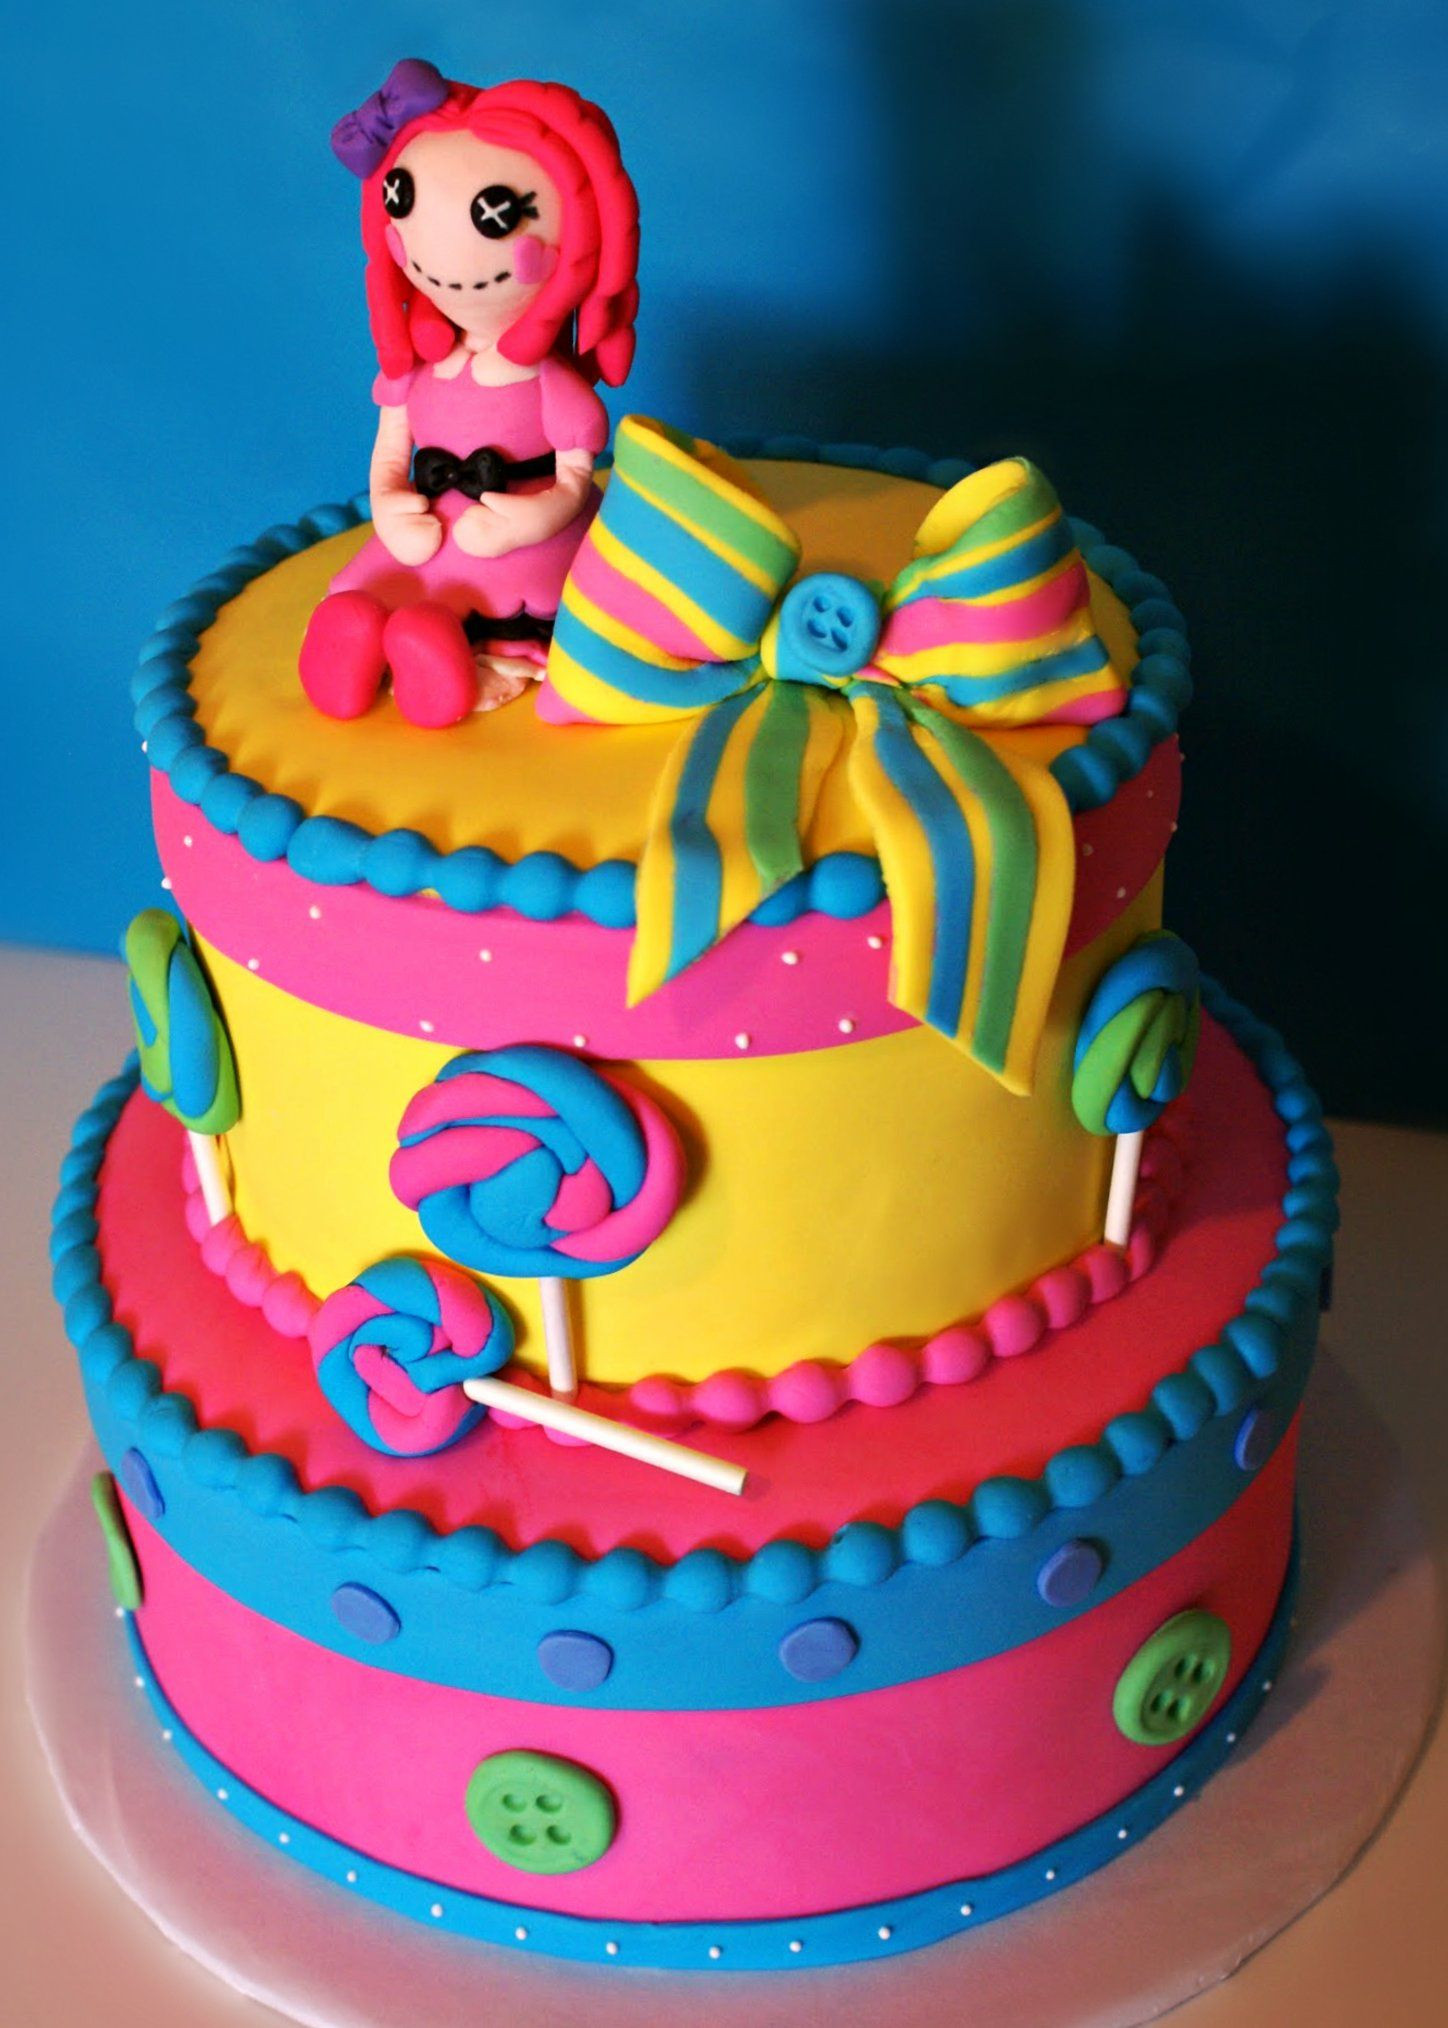 Lalaloopsy Birthday Cake
 Lalaloopsy Cake